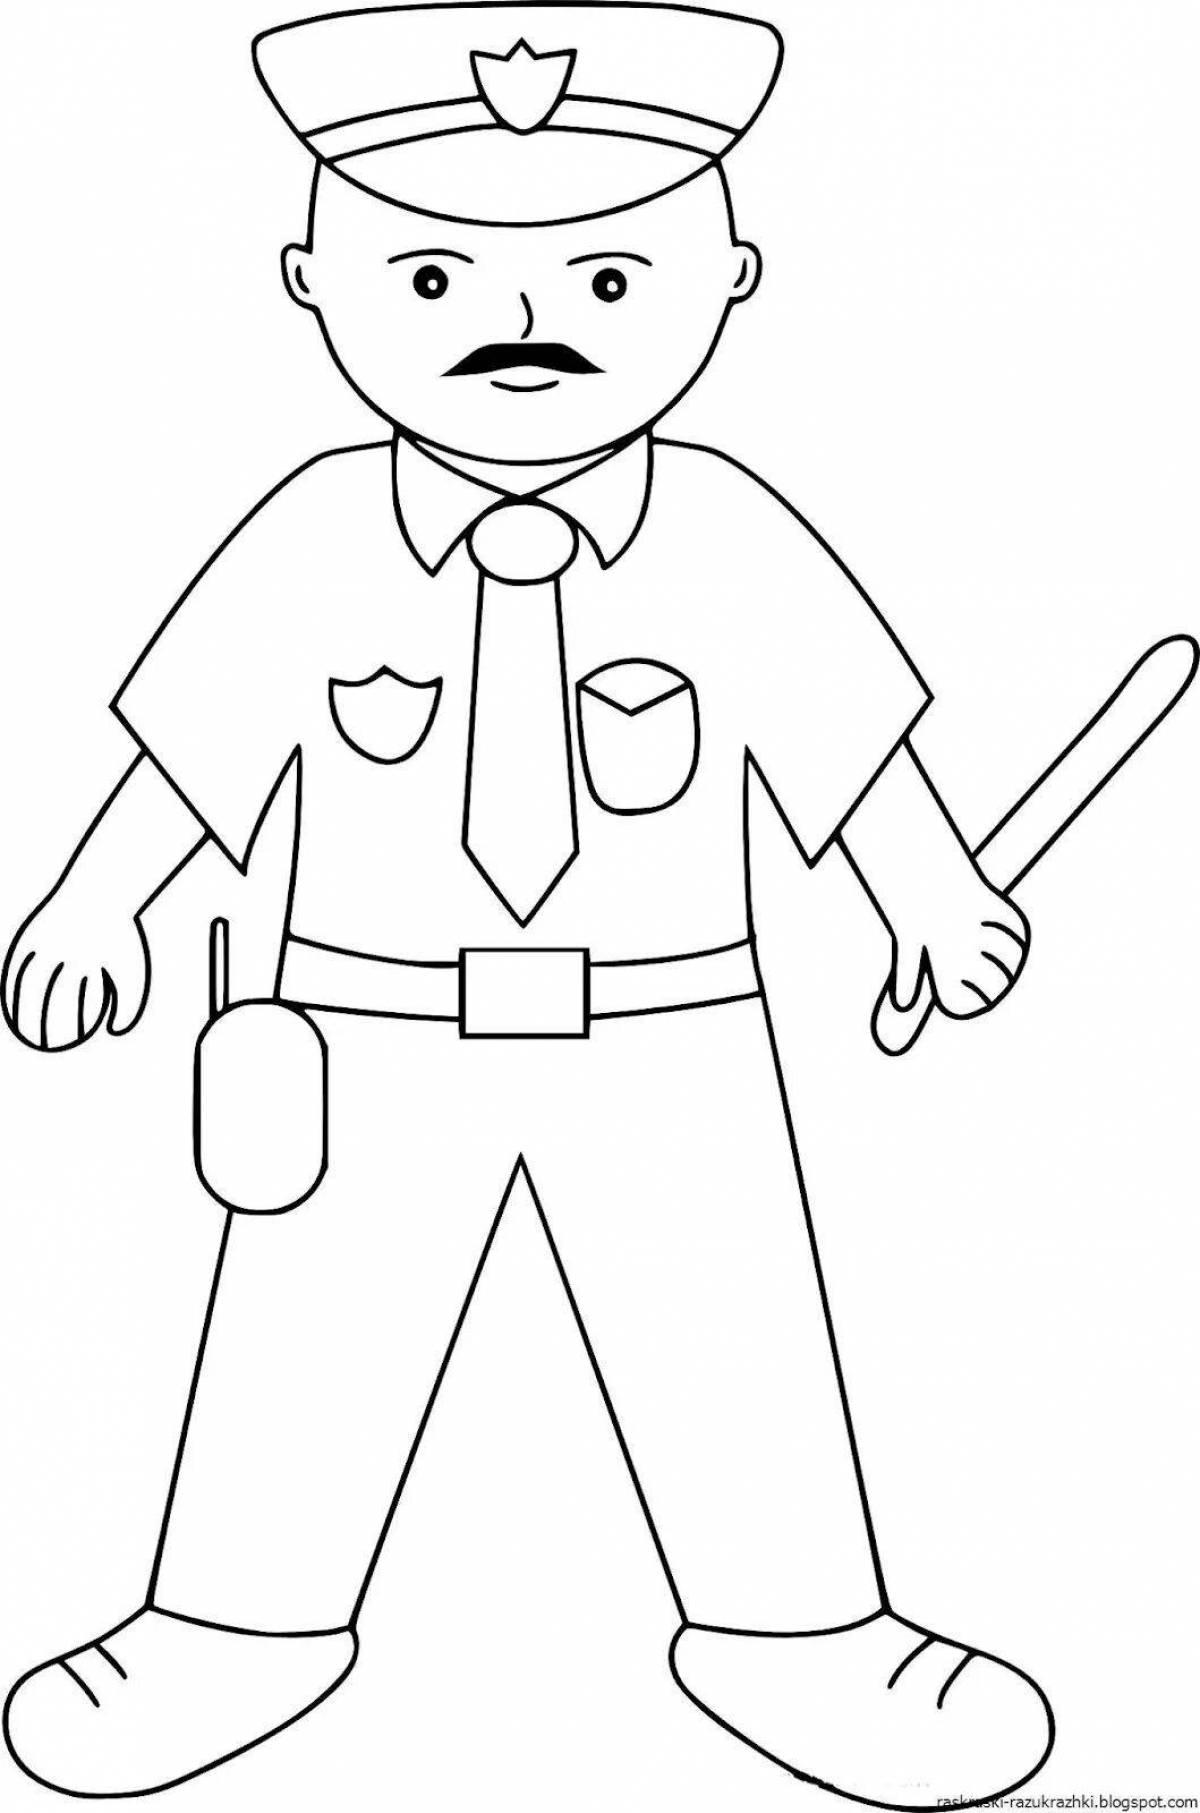 Amazing coloring police figure